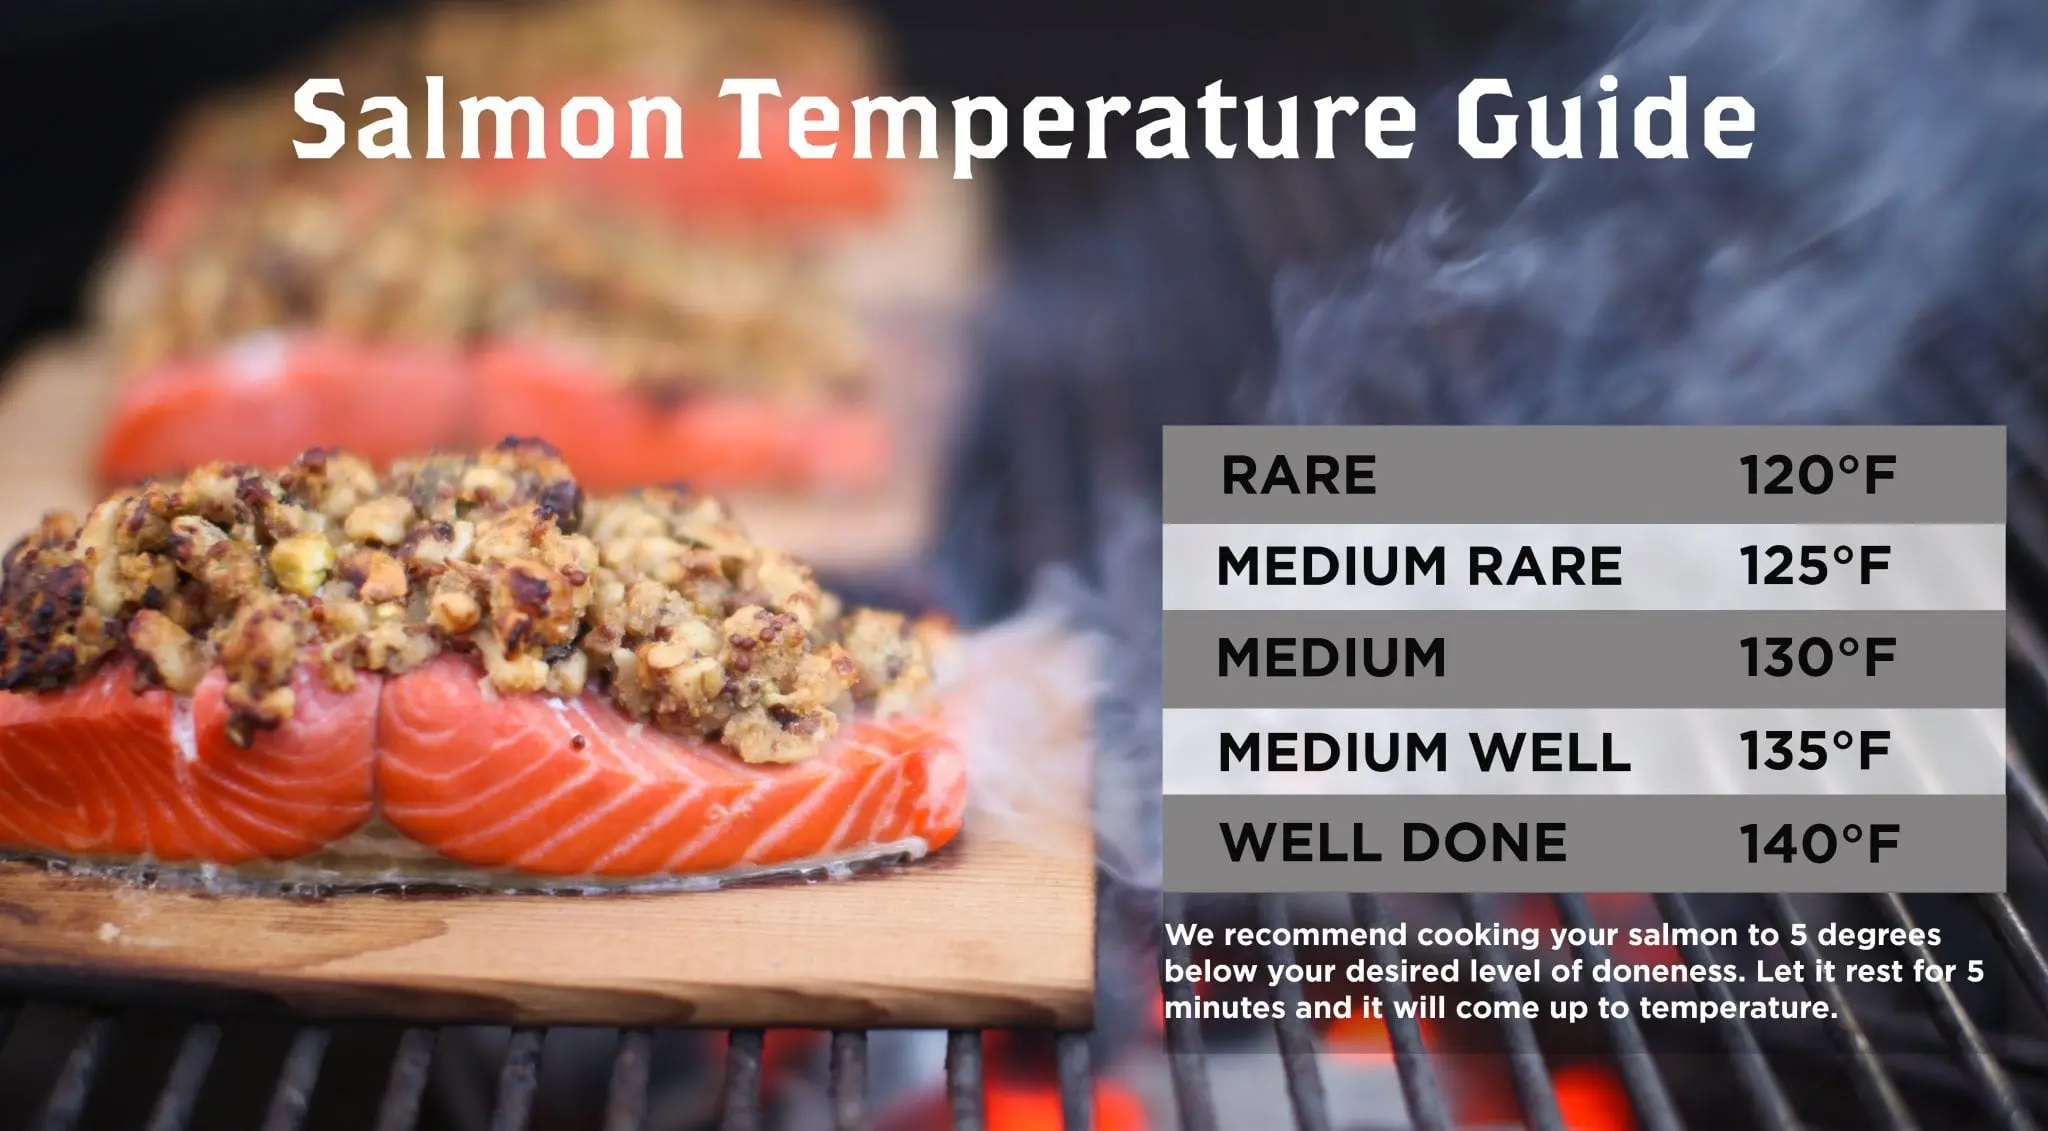 smoked salmon done temp - What temp should smoked salmon be kept at